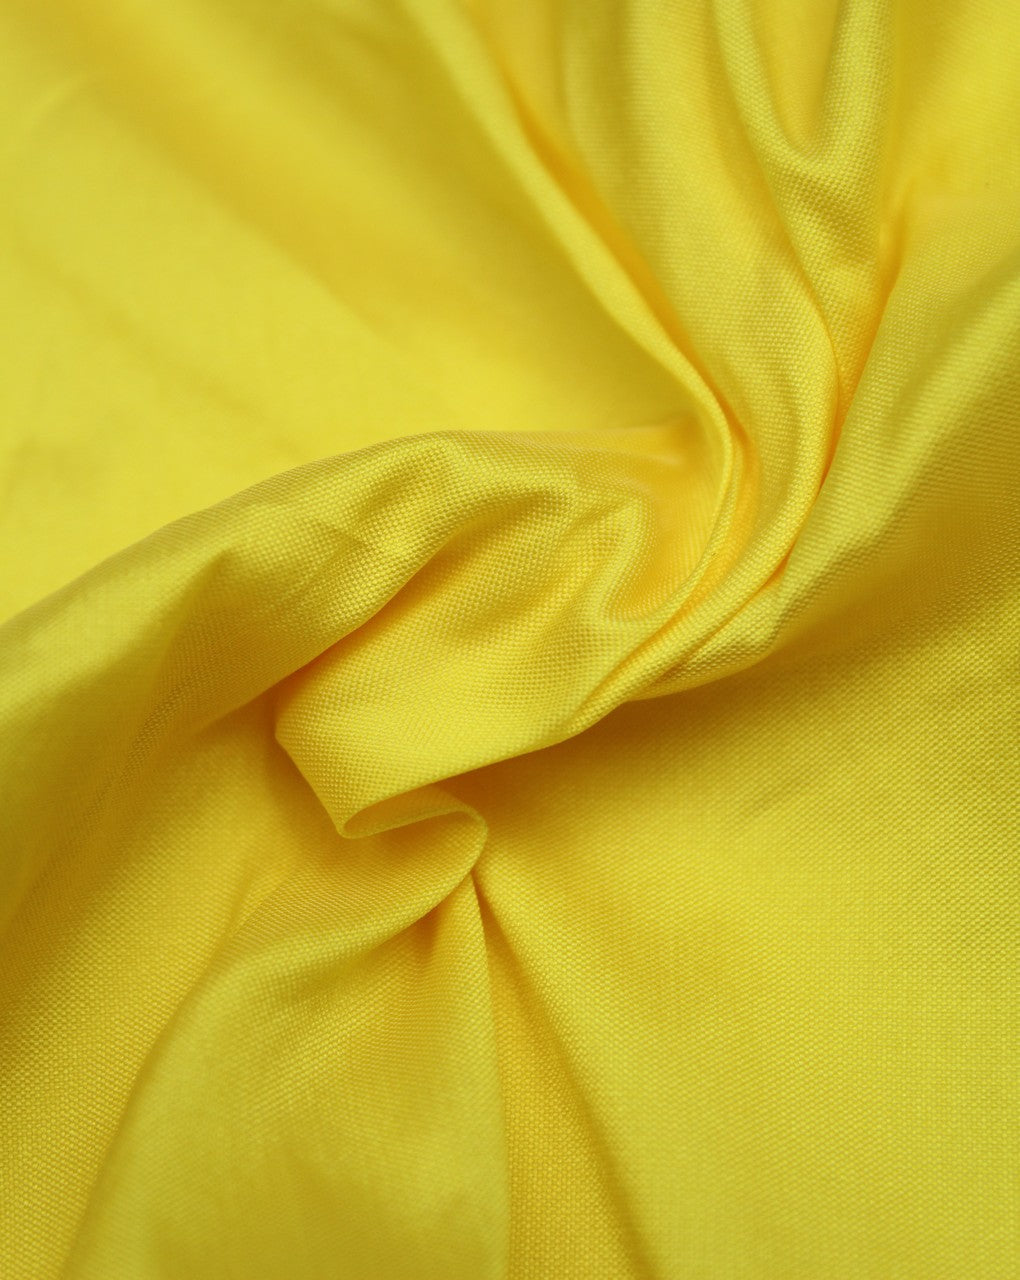 Plain Yellow Polyester Taffeta Fabric